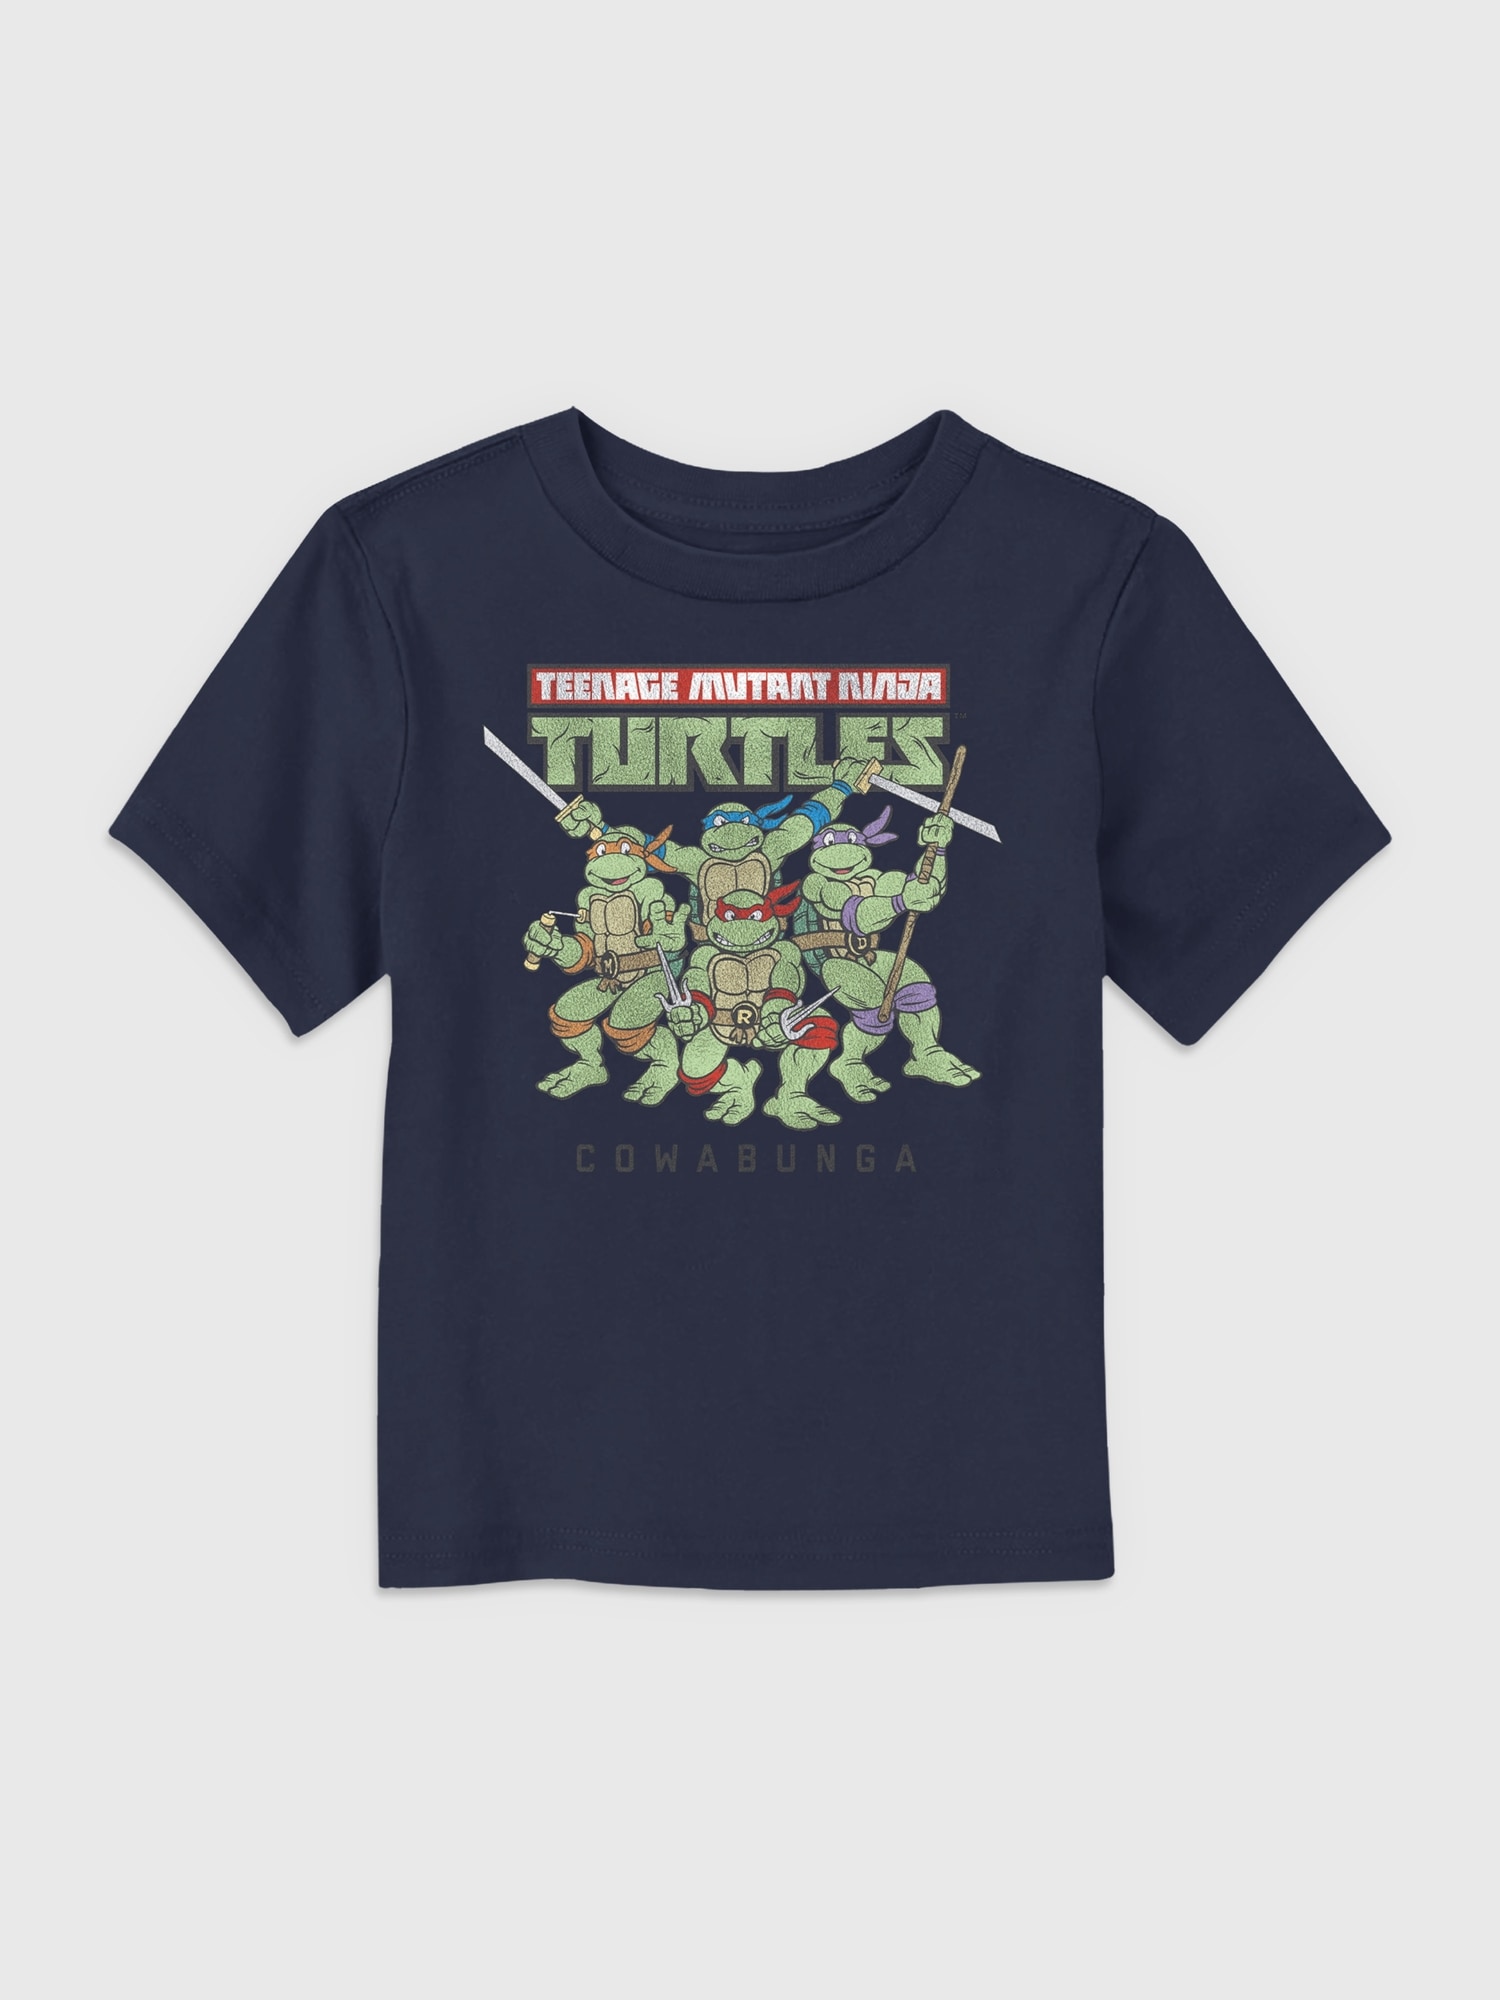 Nick Jr Teenage Mutant Ninja Turtles Cowabunga Yellow T Shirt